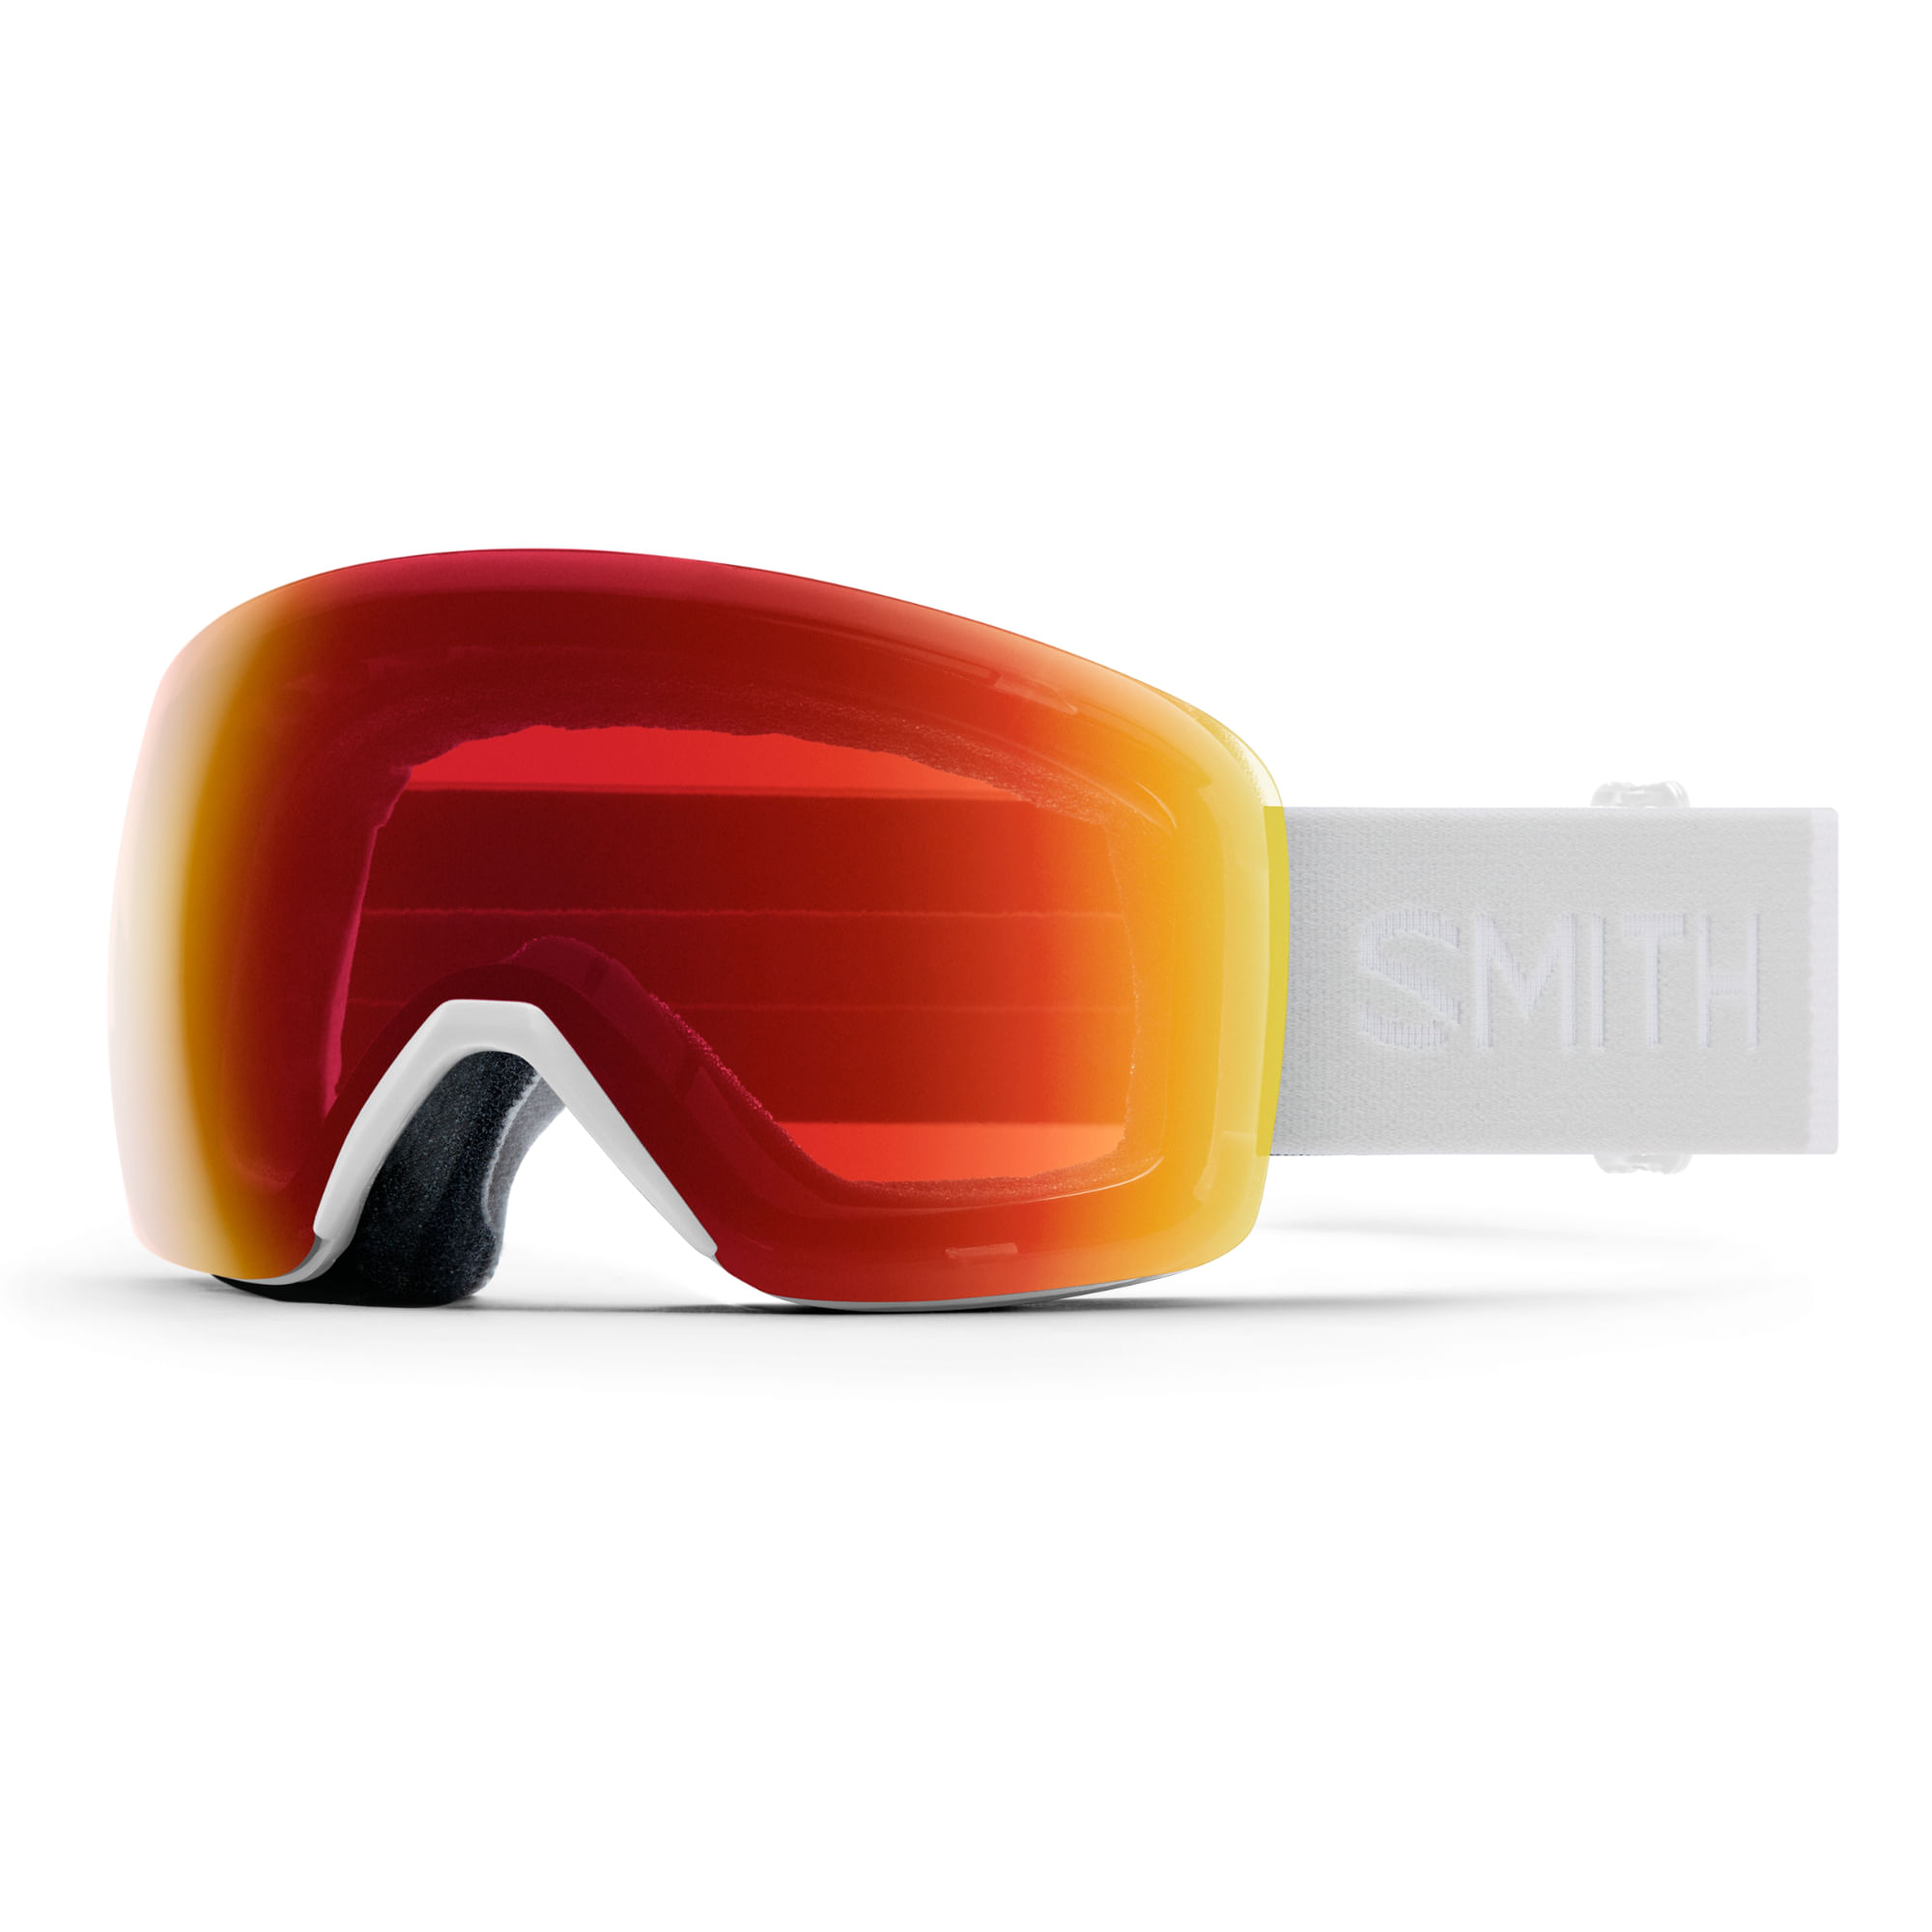 nike sb snowboarding goggles for kids - 728 - Ariss-euShops - Nike